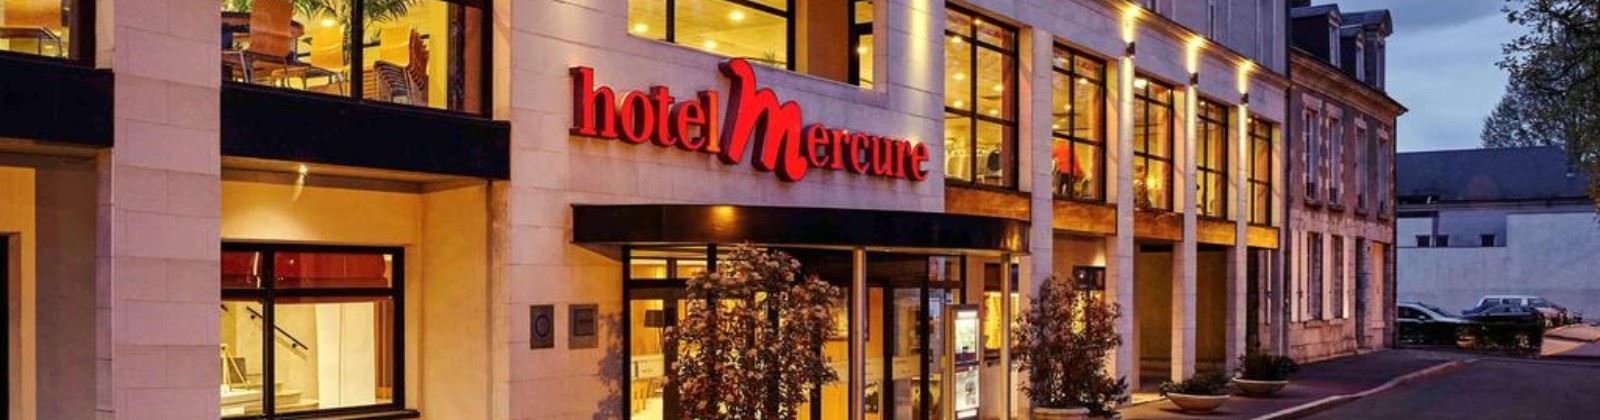 OLEVENE image - hotel-mercure-blois-olevene-restaurant-seminaires-meeting-